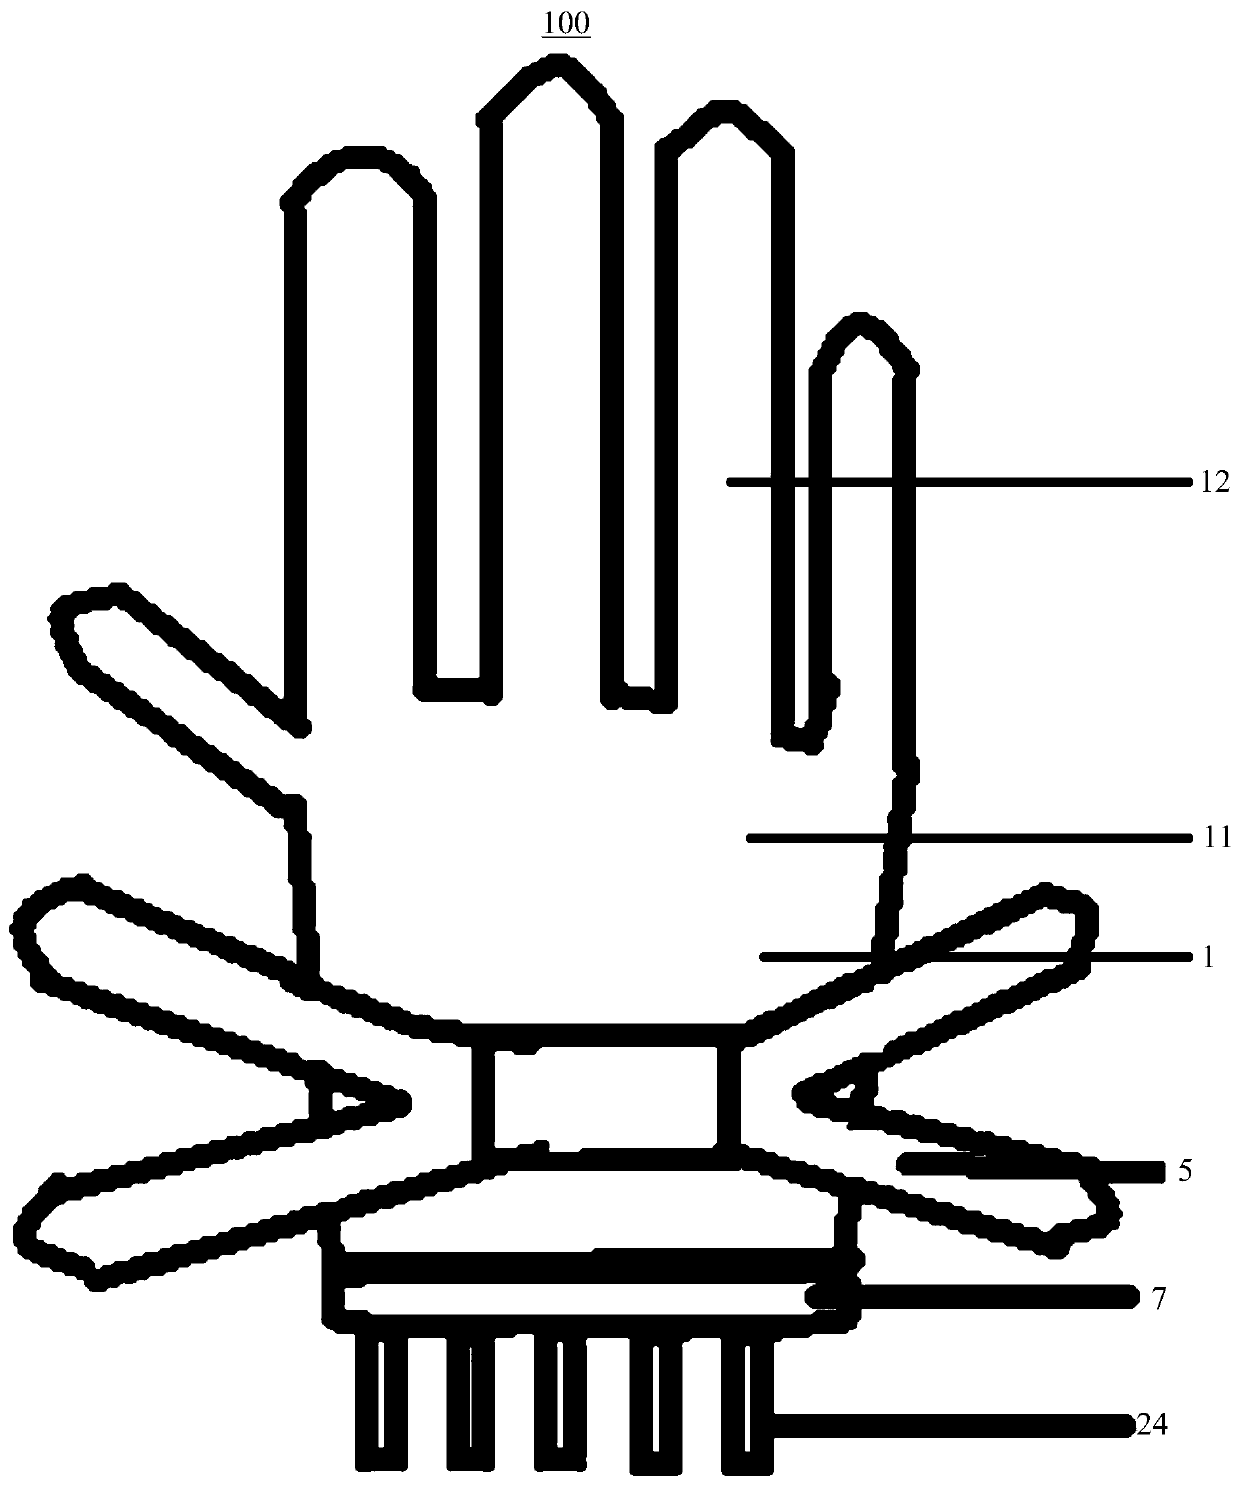 Rehabilitation gloves and hand function rehabilitation equipment